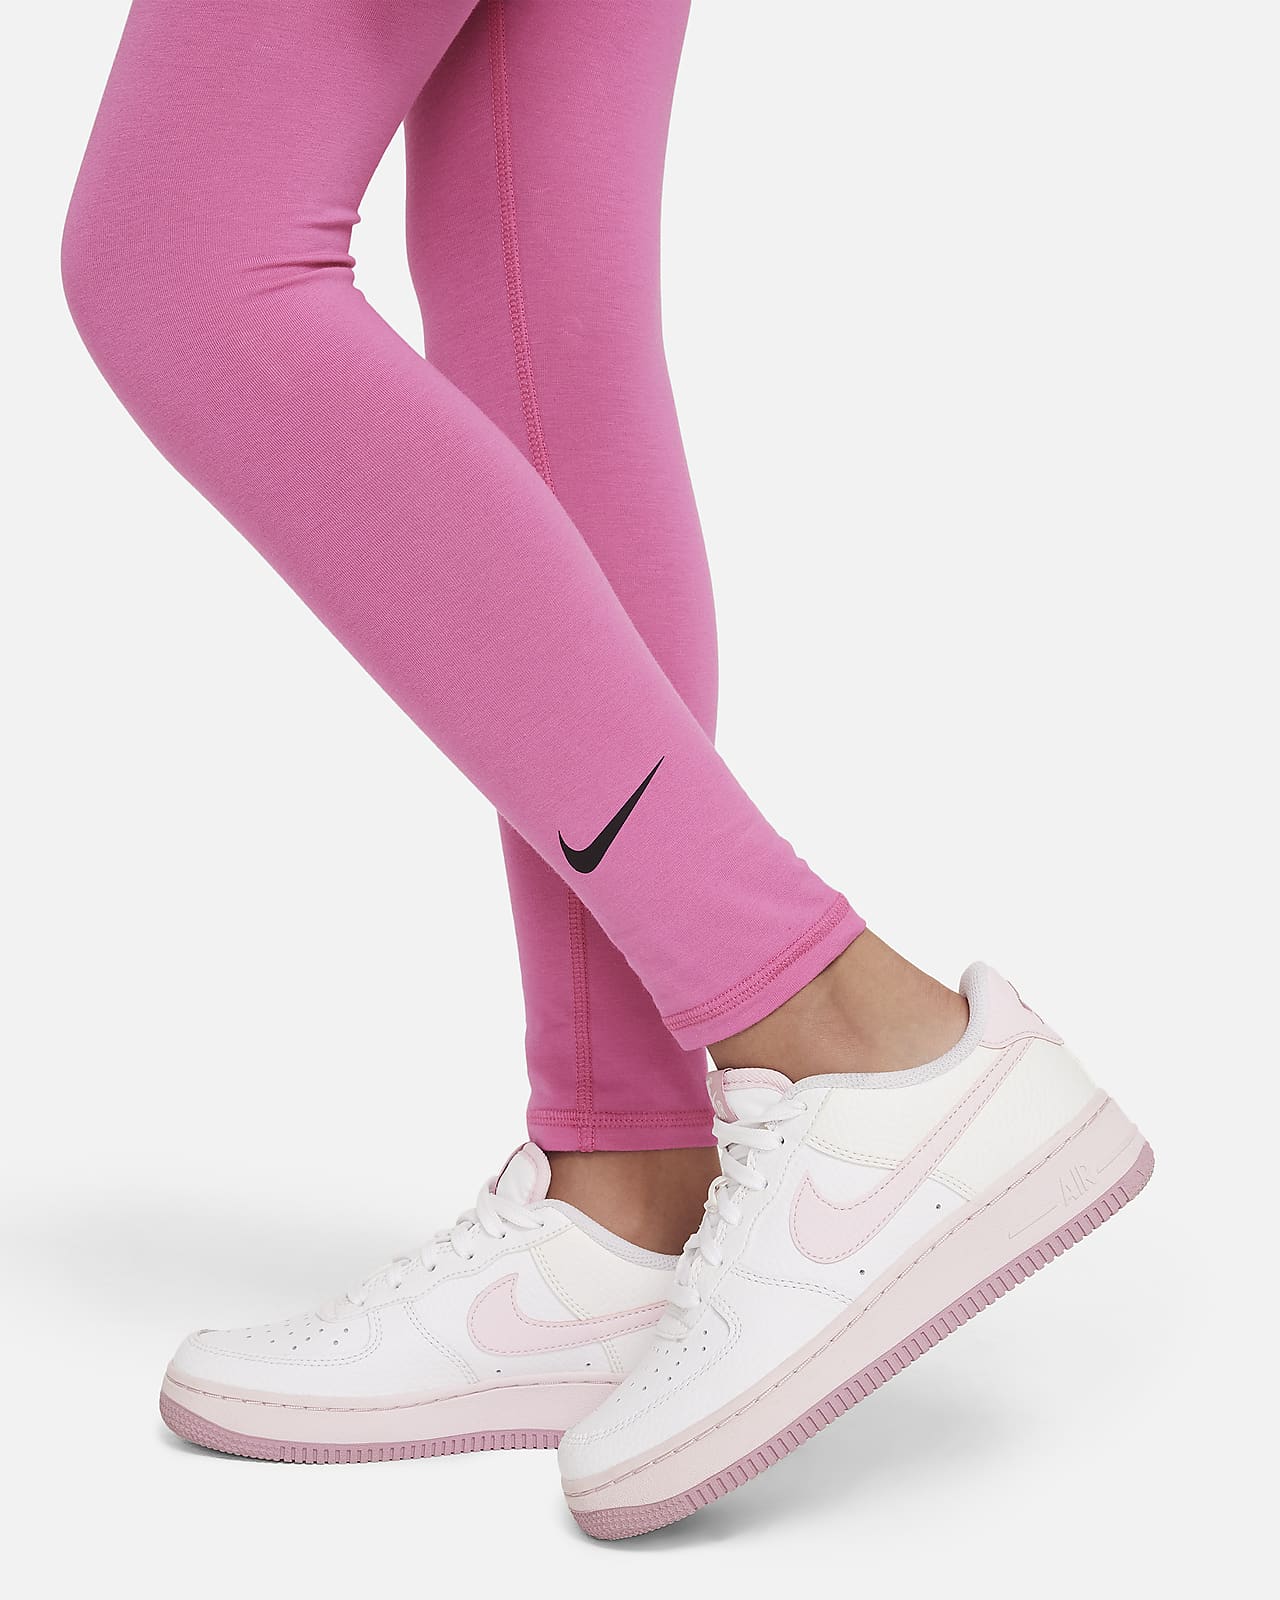 Nike: Girls Sportswear Favorites GX Leggings - Size XL, Girl's